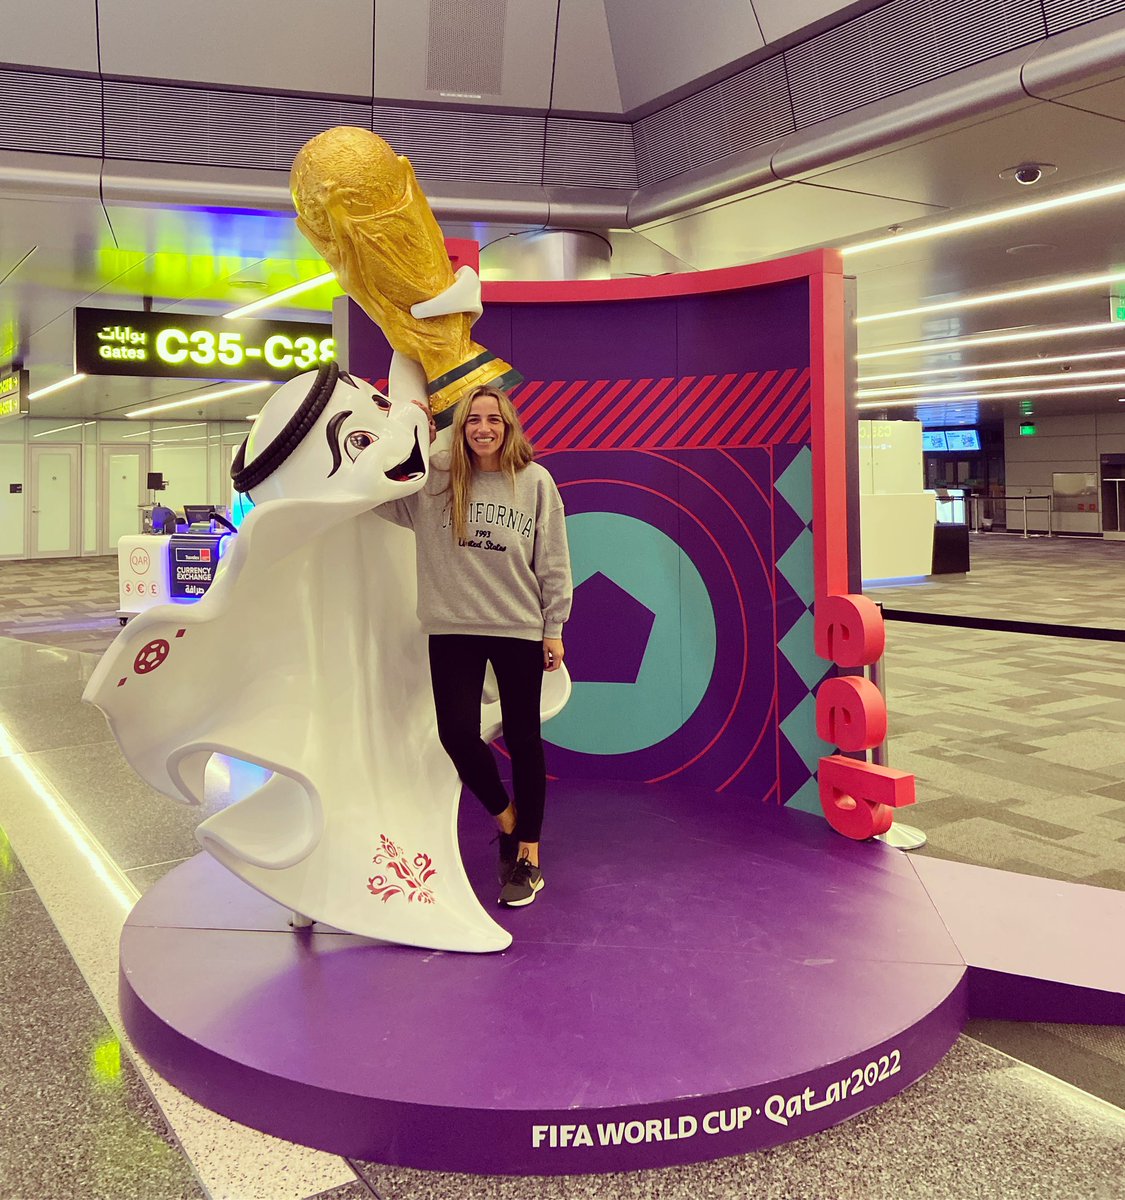 D O H A 🇶🇦 #DohaAirport is named after the previous Emir of #Qatar: Hamad bin Khalifa Al Thani. Doha Hamad Airport is located 4 kilometres south of its capital, #Doha. #RedLipsPorElMundo 💋💄 #RedLipsAlways #MyLifeAroudTheWorld 🌎 #LoveTravel ❤️ #TravelAddict 🗺📌 @crisainz